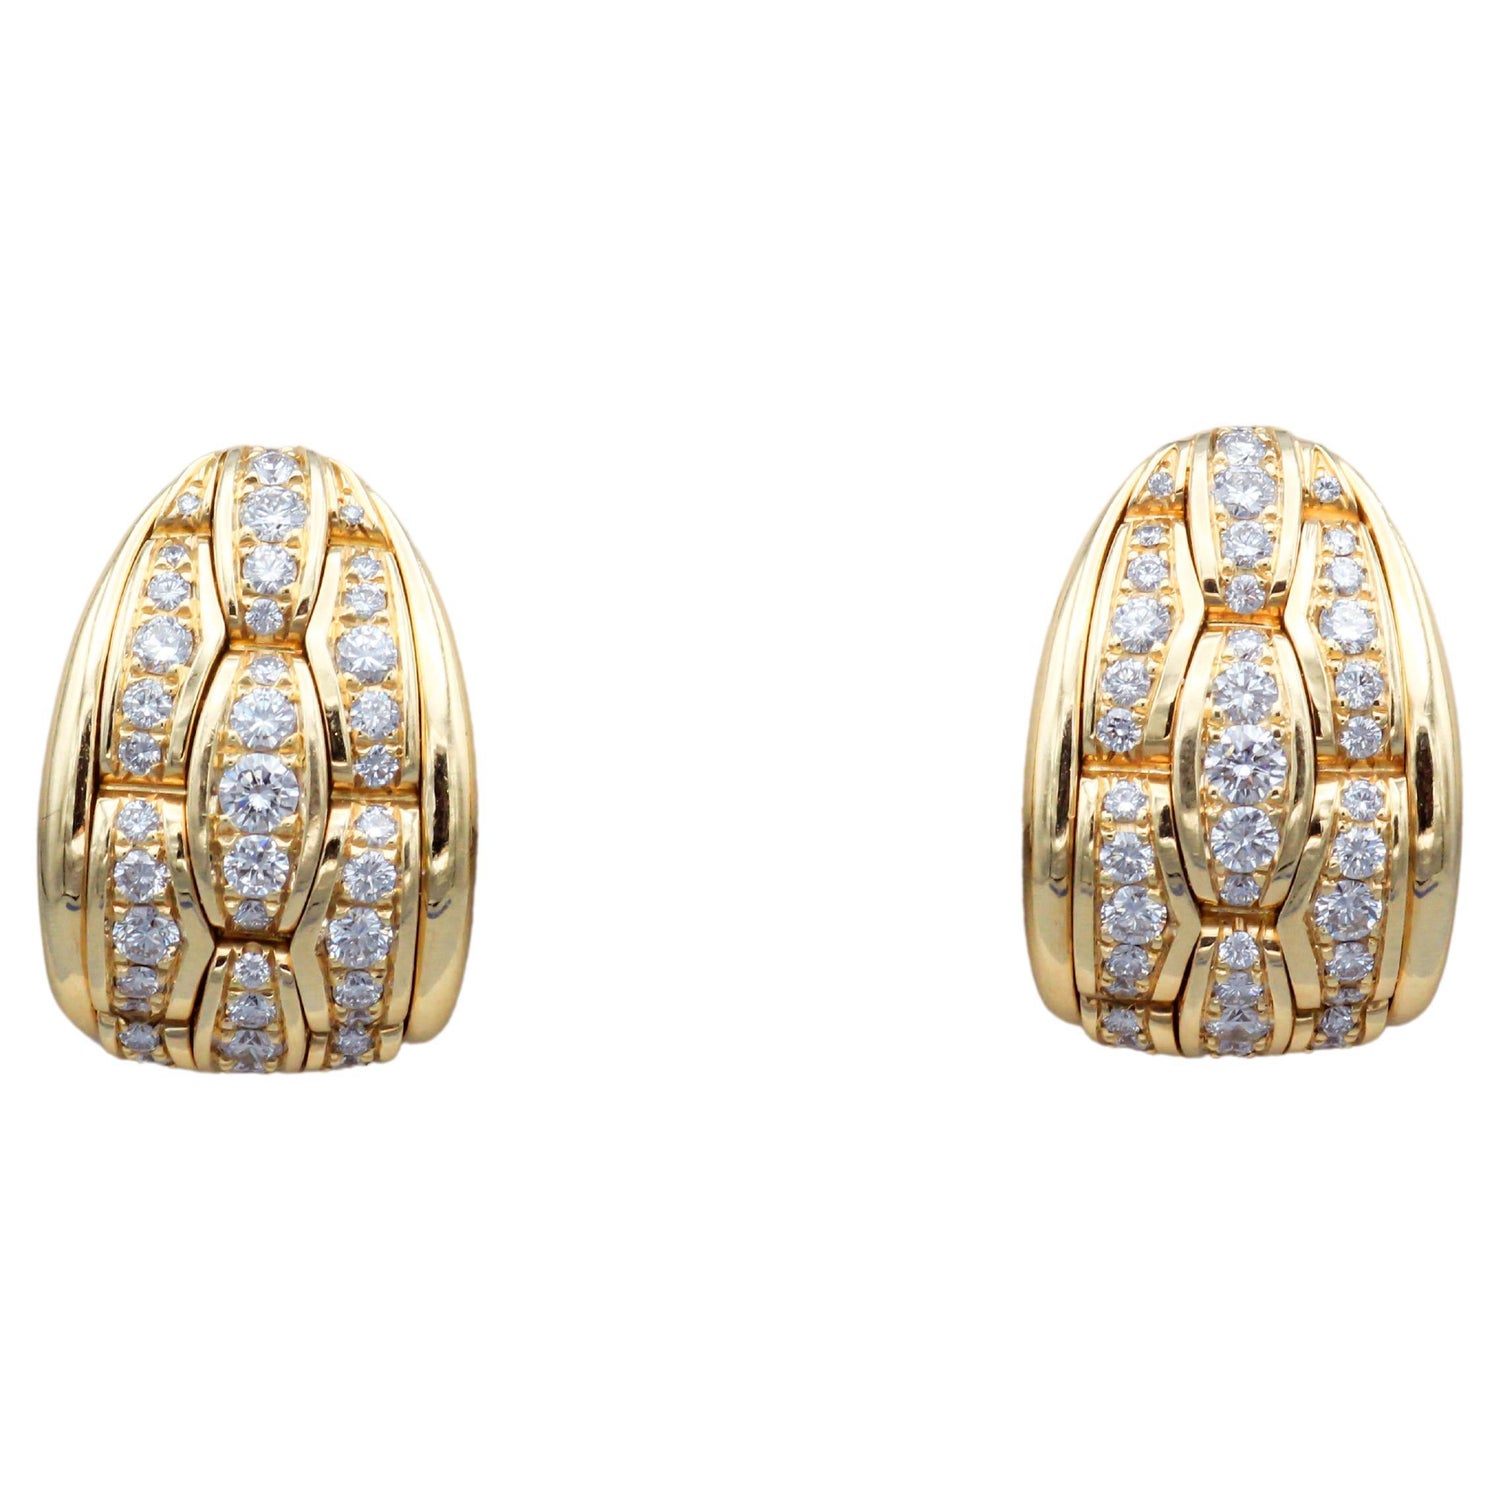 French Designer Louis Feraud Diamond 18k Gold Earrings, Paris, Signed